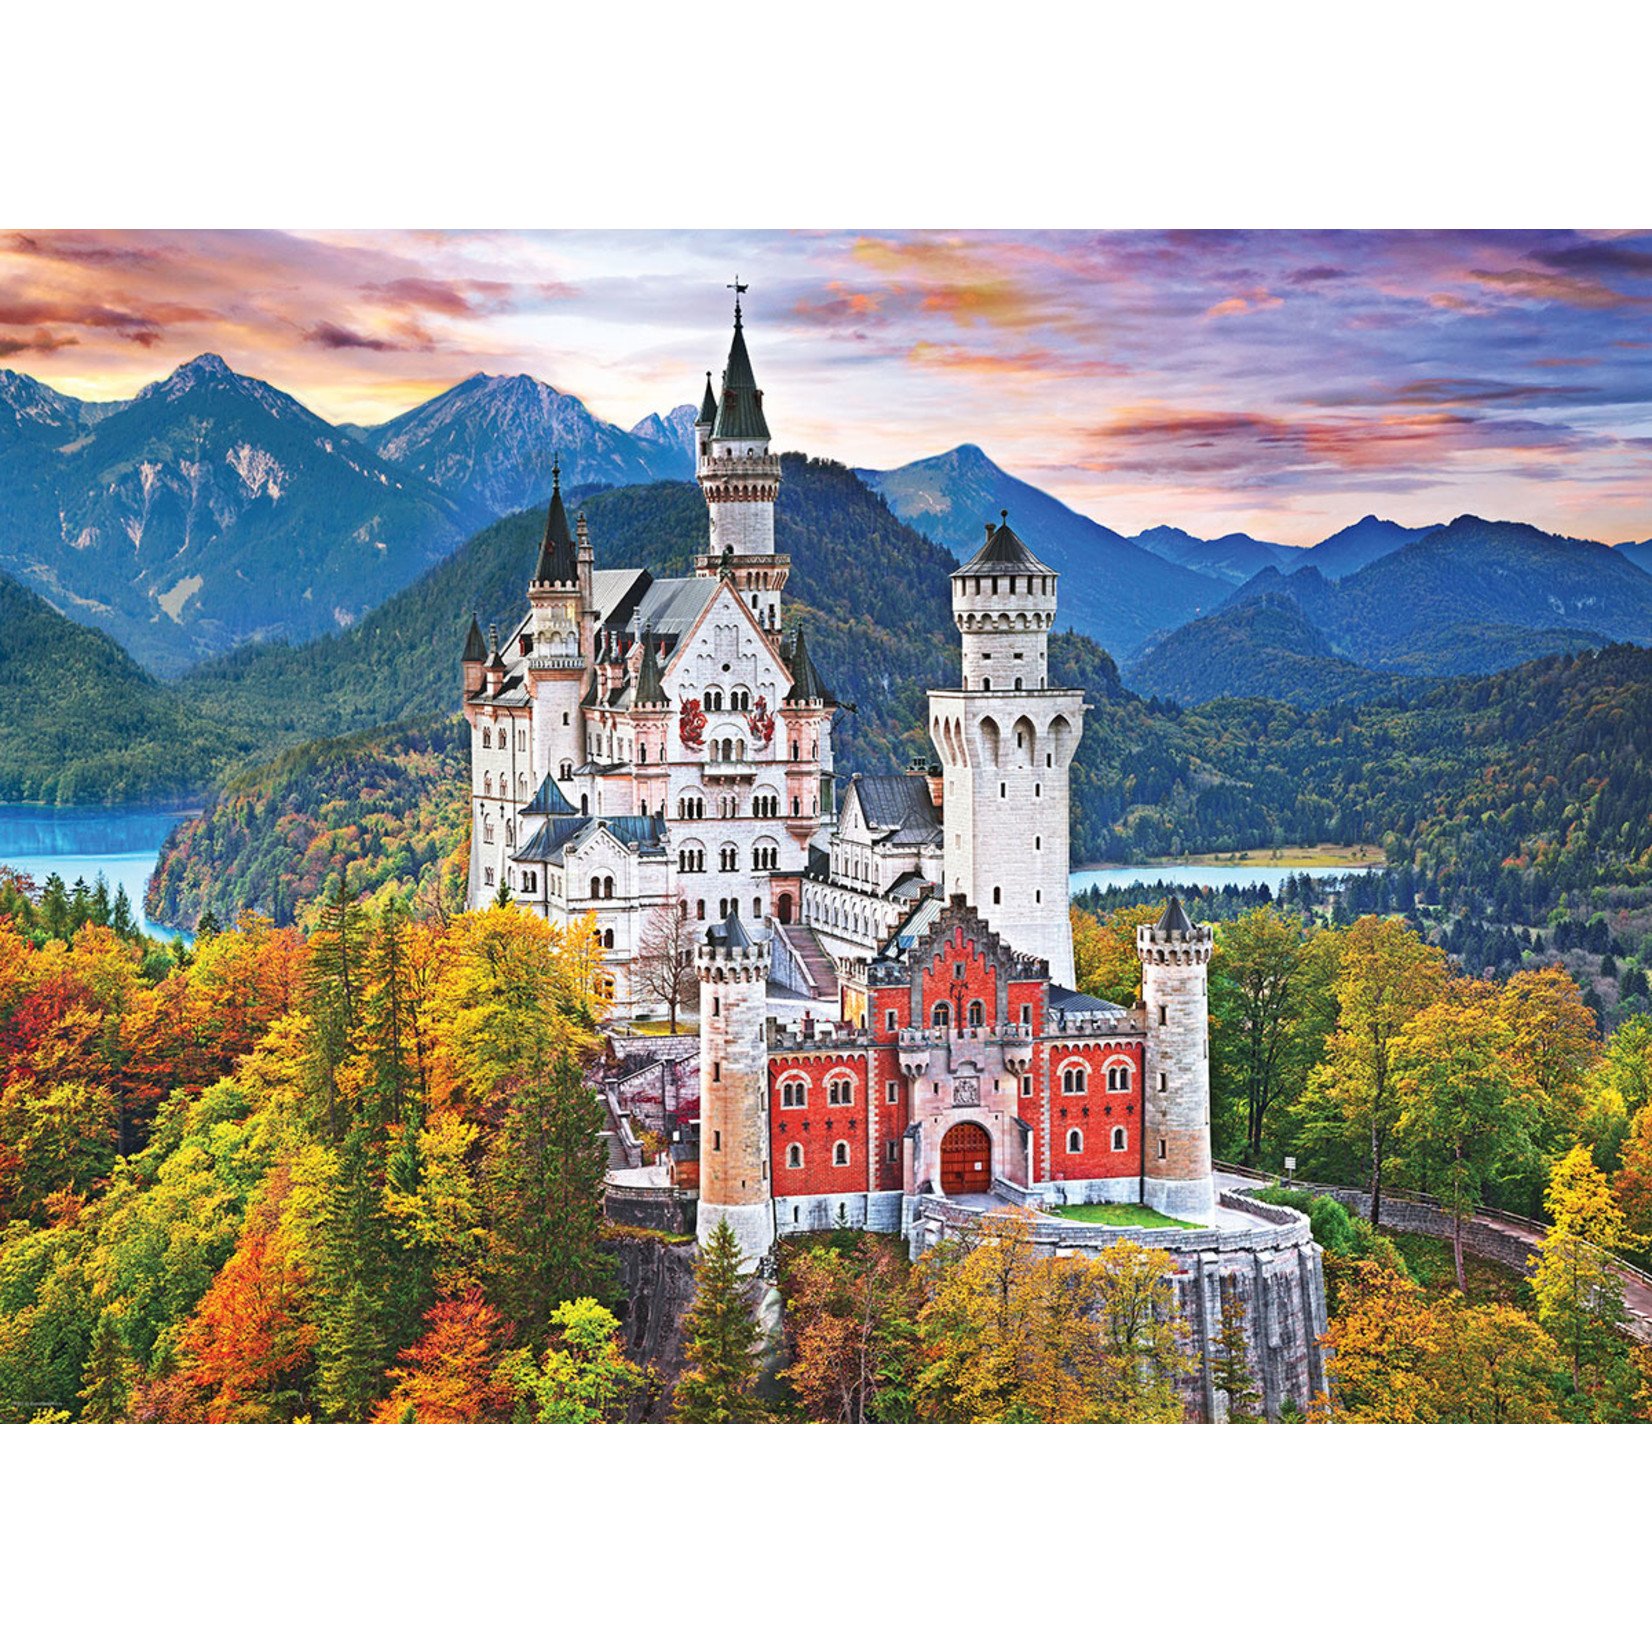 EuroGraphics Puzzles Neuschwanstein Castle 1000pc